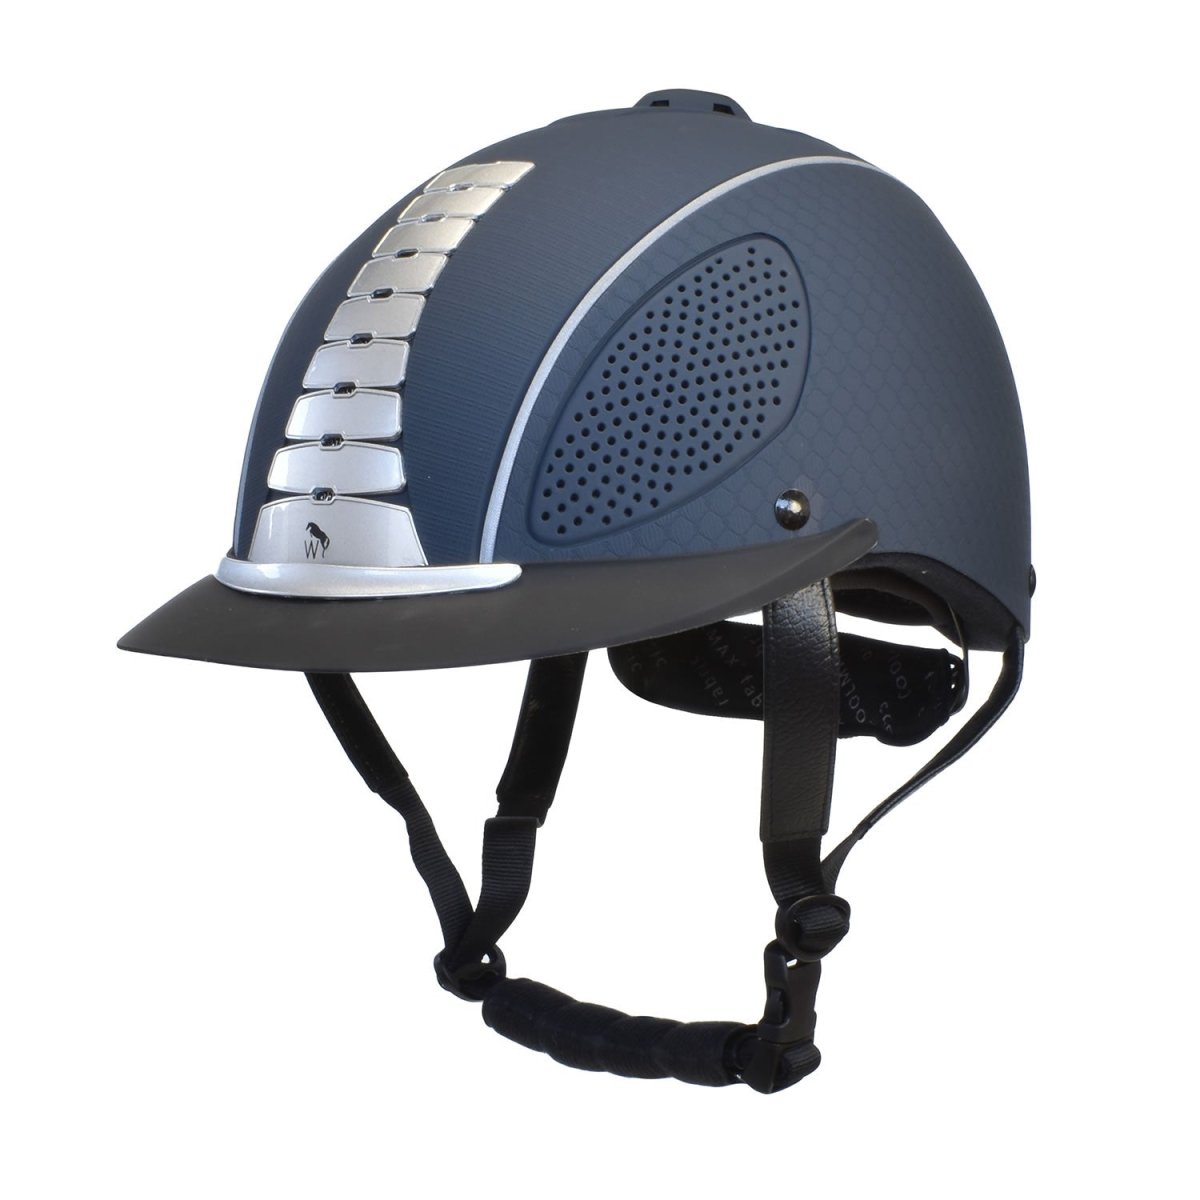 Whitaker Horizon Helmet - Navy - Small(50-54Cm)